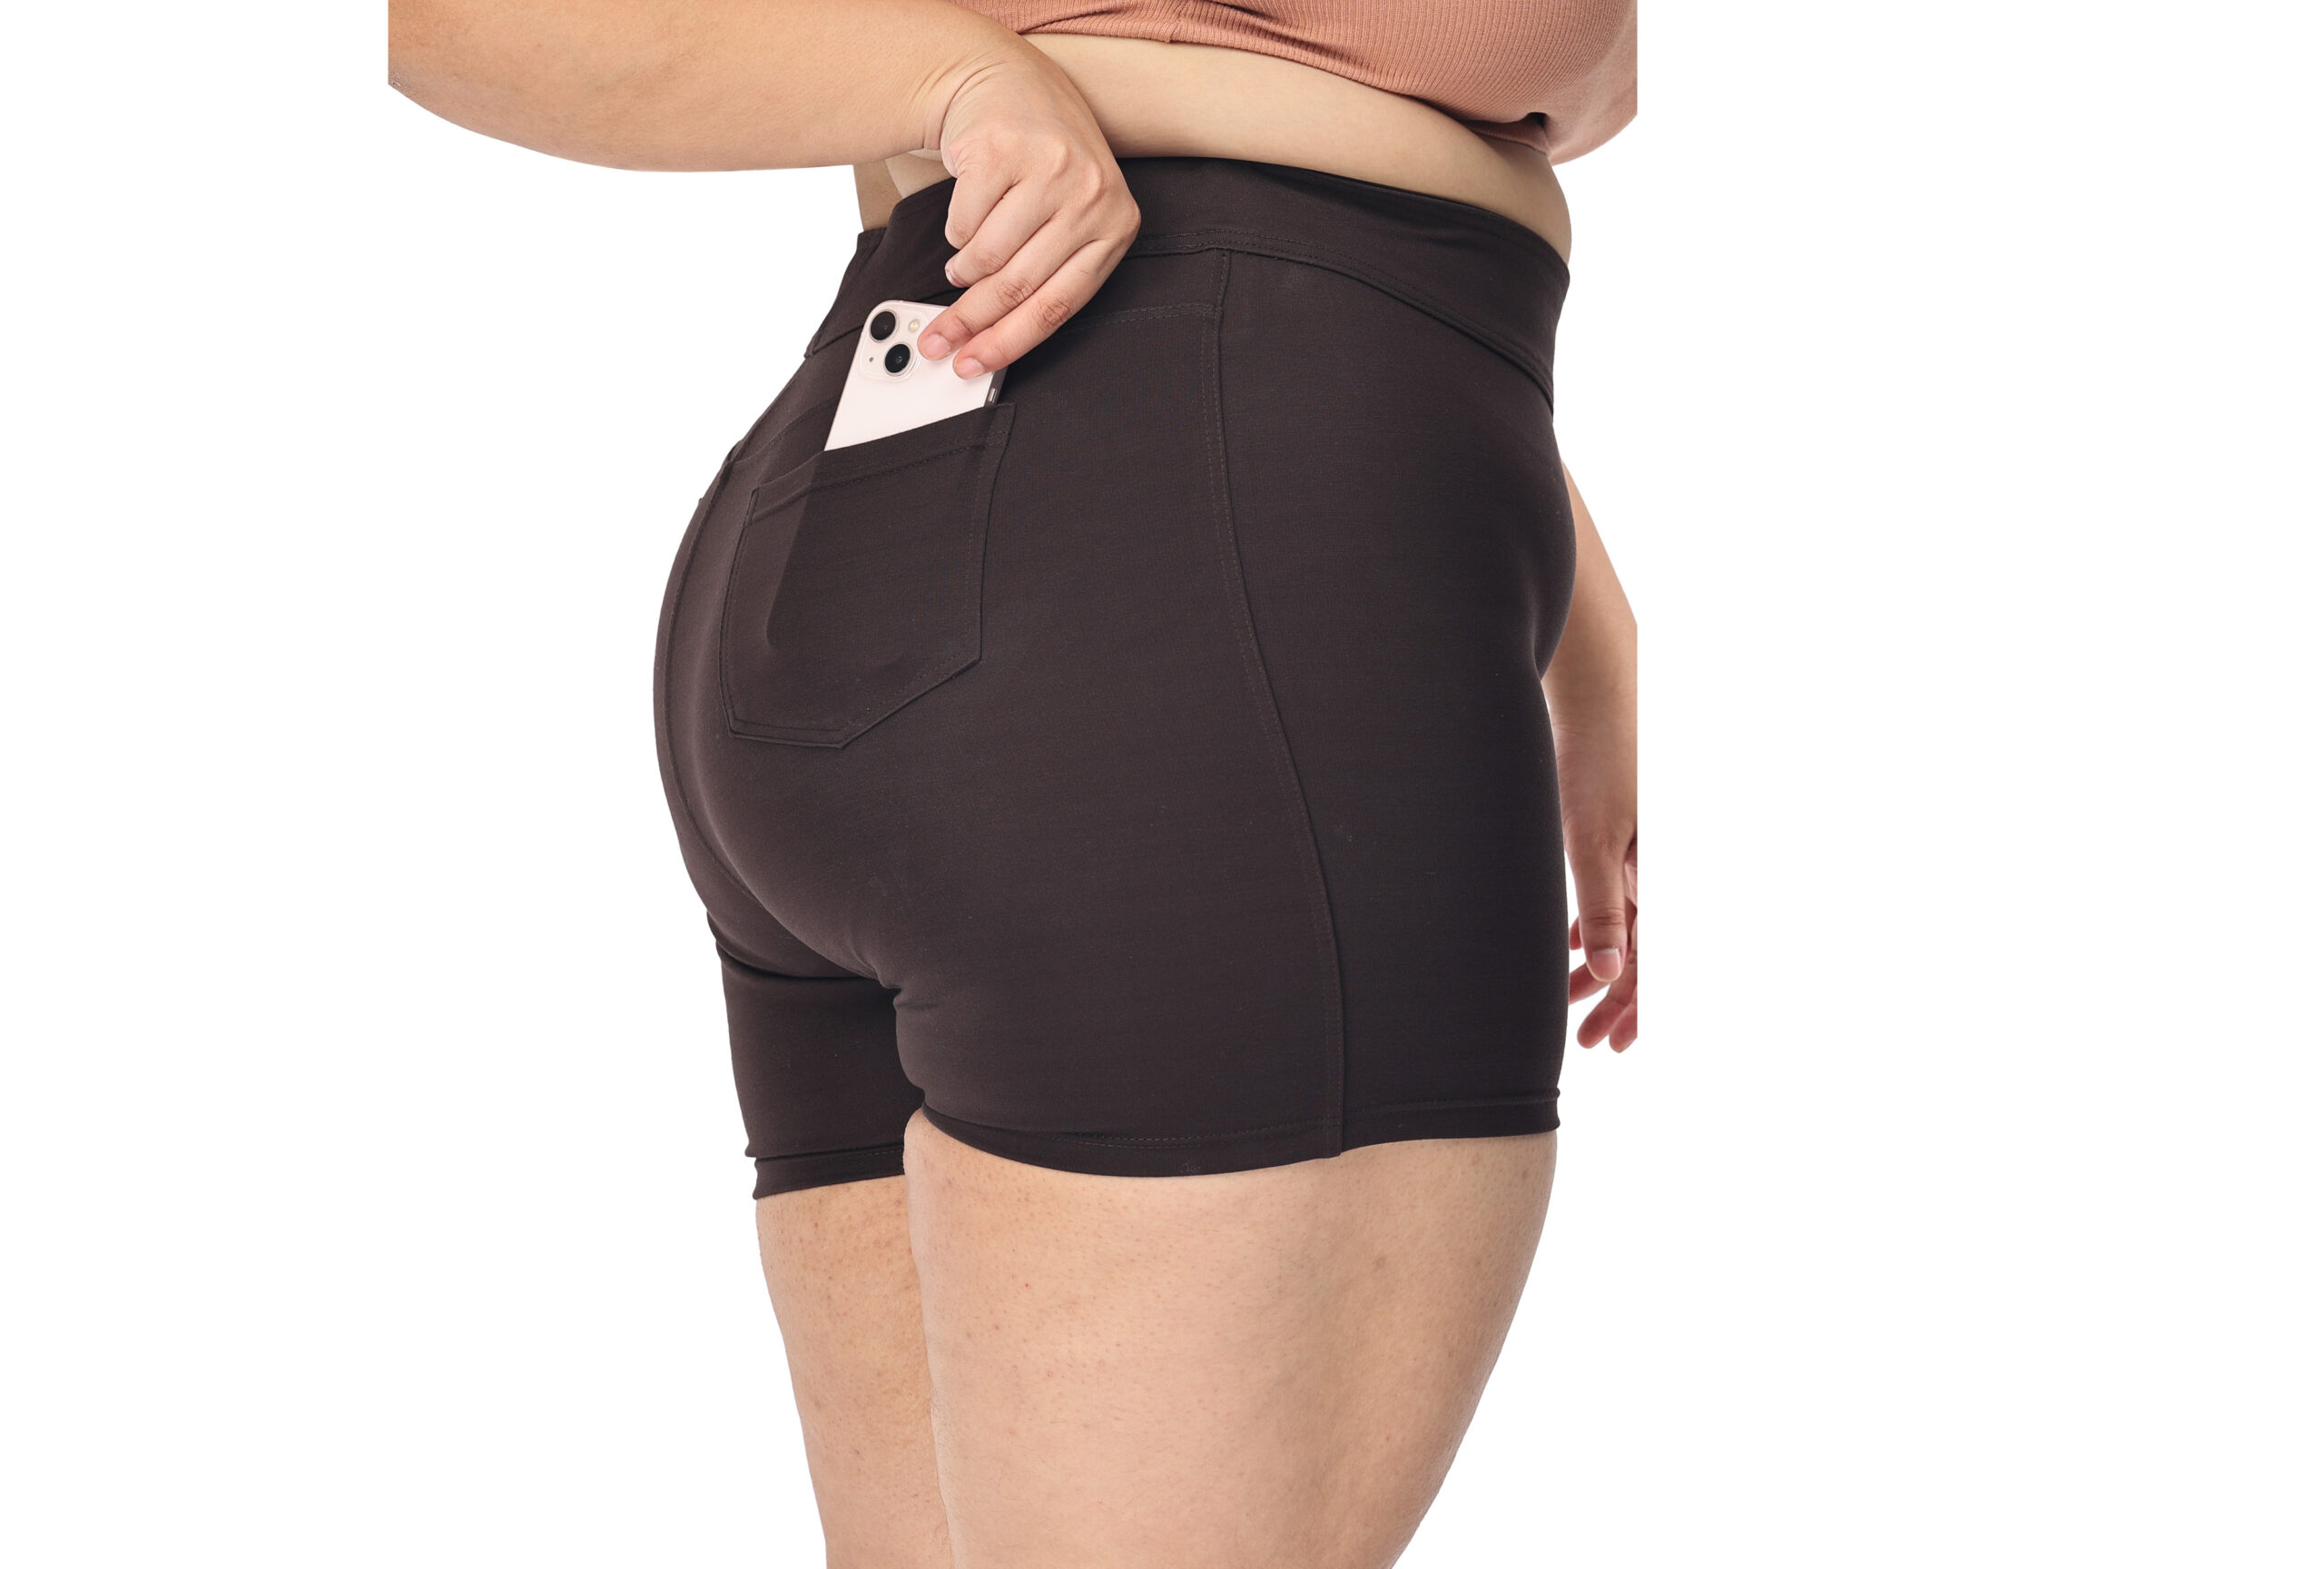 Pink shorts women - Plus size active shape wear - 2 back pockets - Belore  Slims